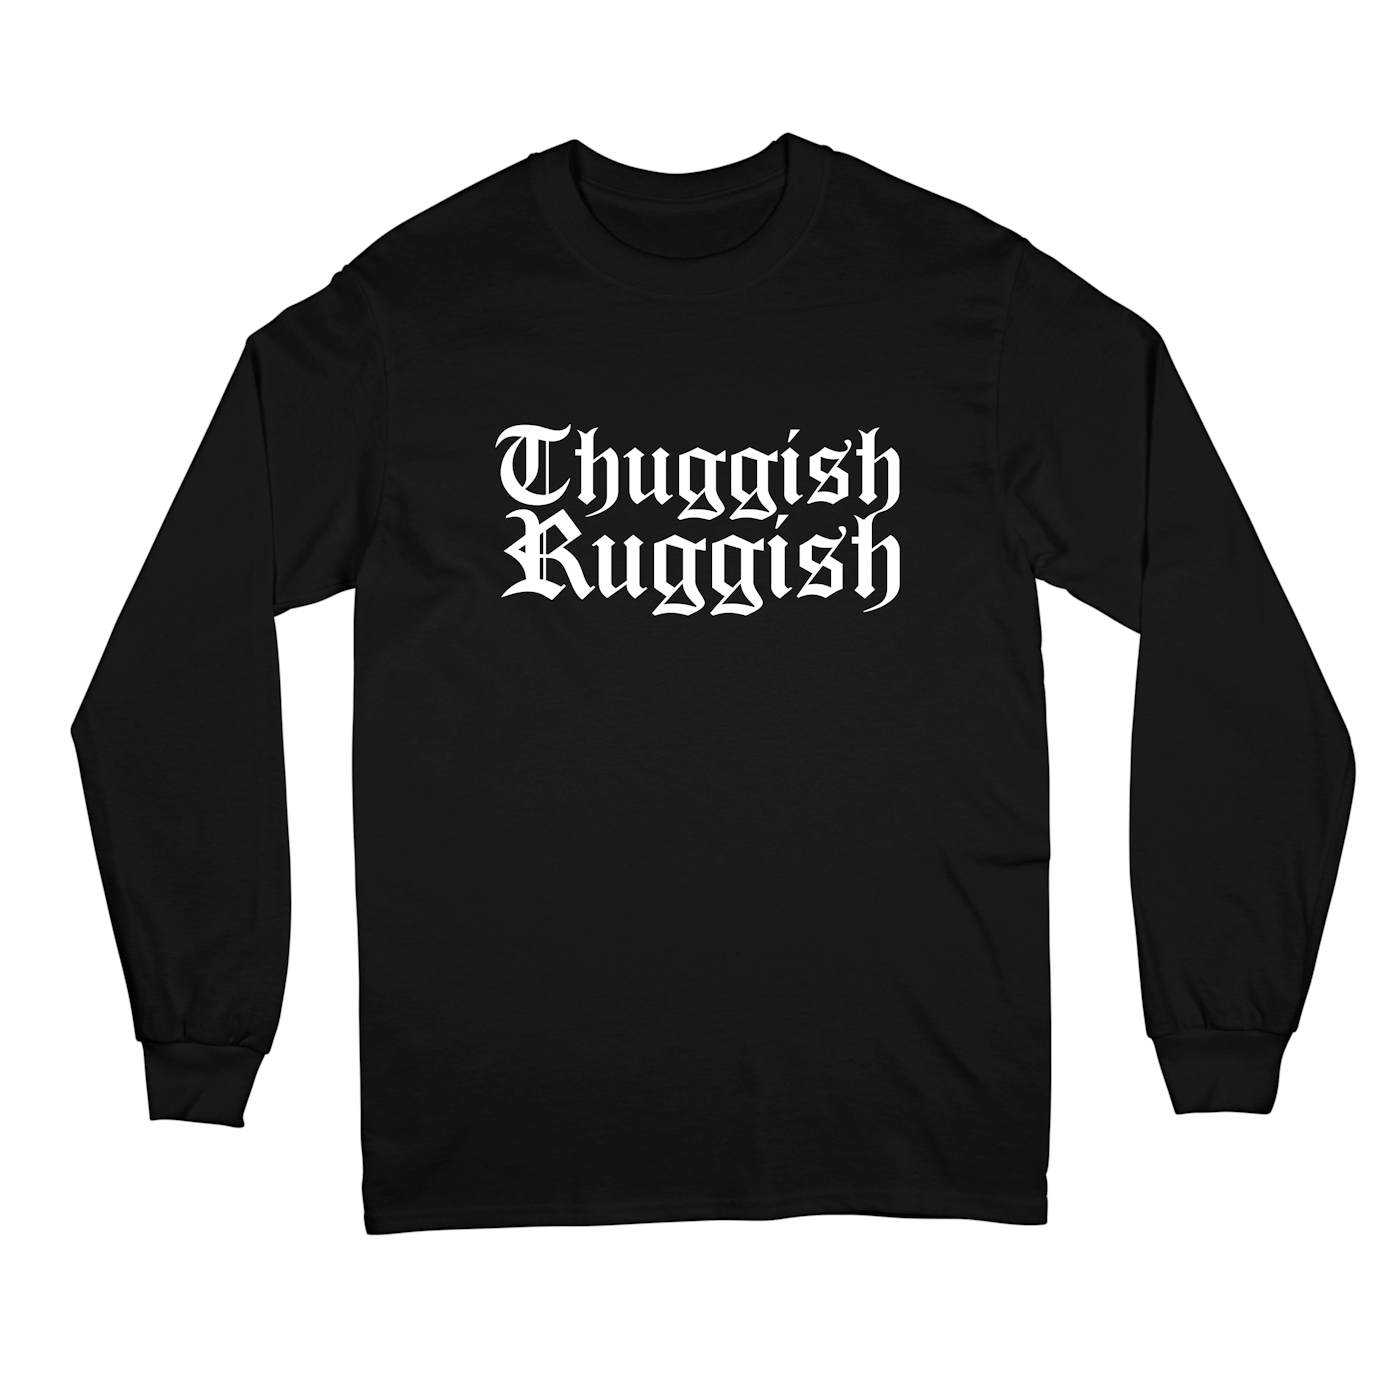 Bone Thugs-N-Harmony Thuggish Ruggish White Logo "Black" Long Sleeve